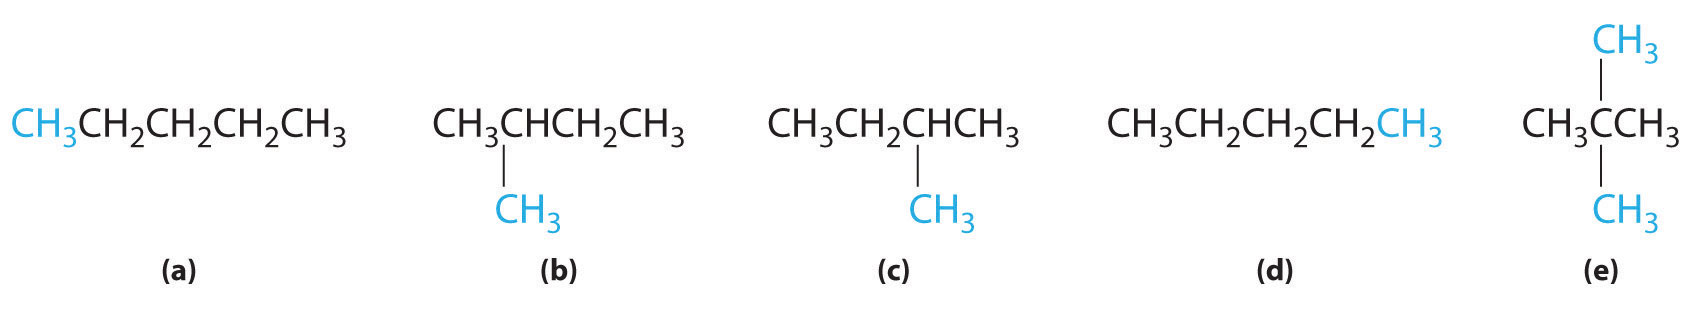 Structural isomers of 2-methylbutane, 2,2-dimethylpropane, and n-pentane. 